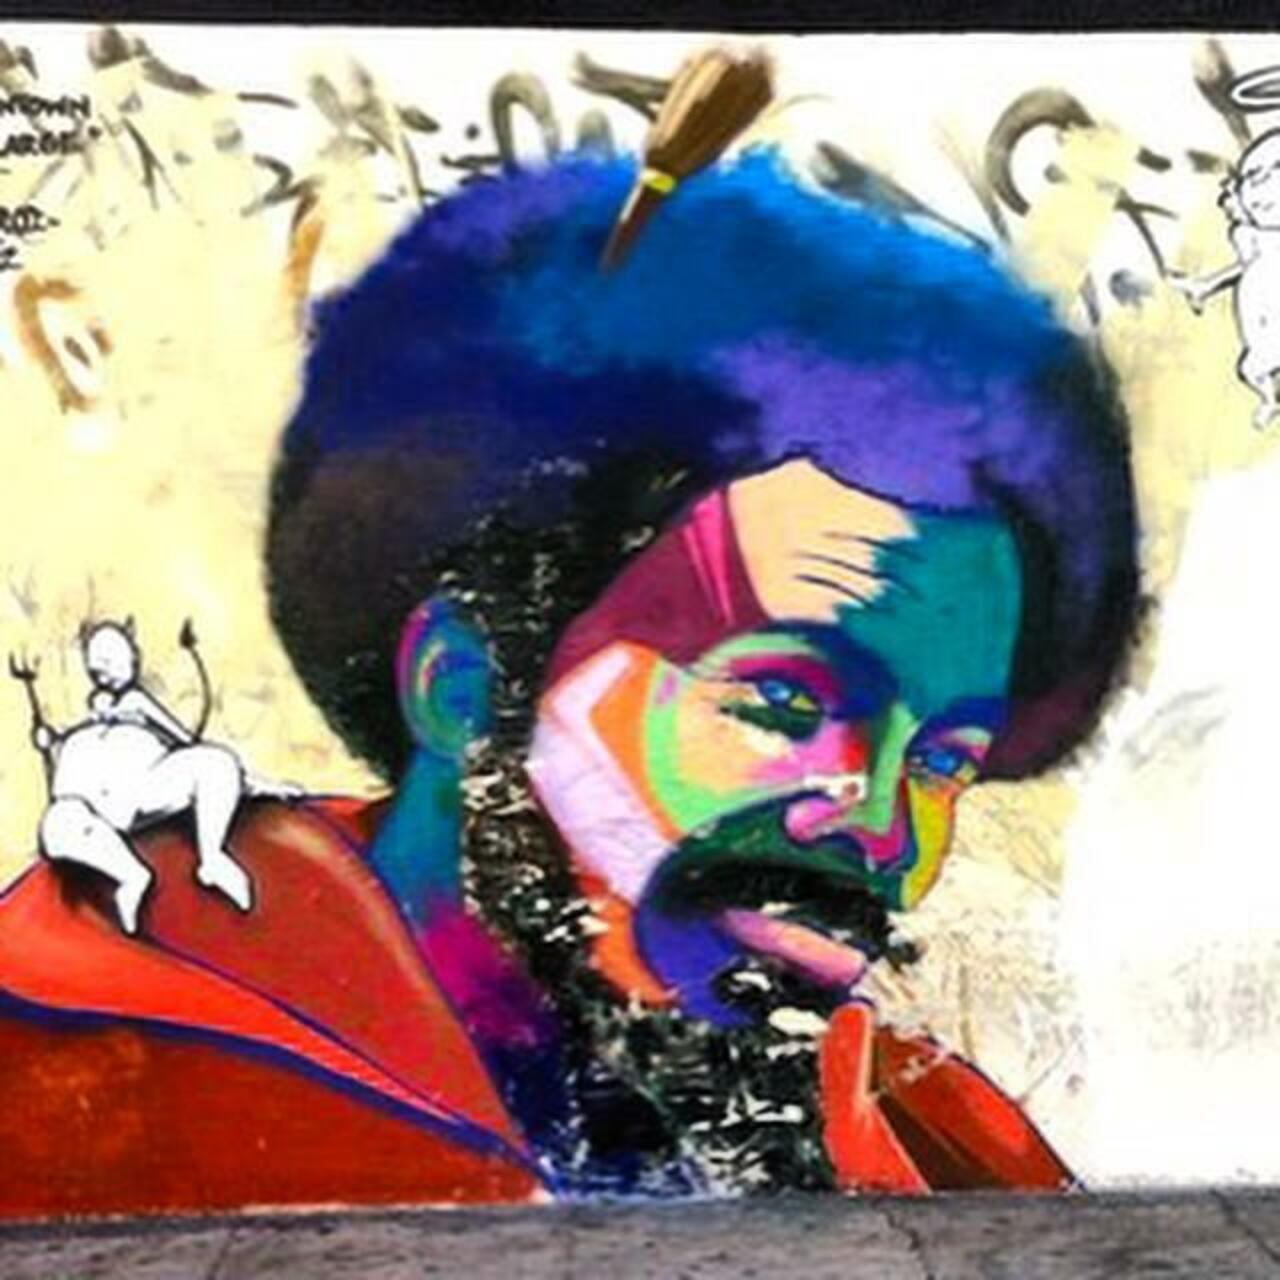 #Streetart in #LosAngeles #mural #graffiti #instagraffiti #publicart #urbanart #graffitiart #graff #graffart #stree… http://t.co/YUlnV95UnG